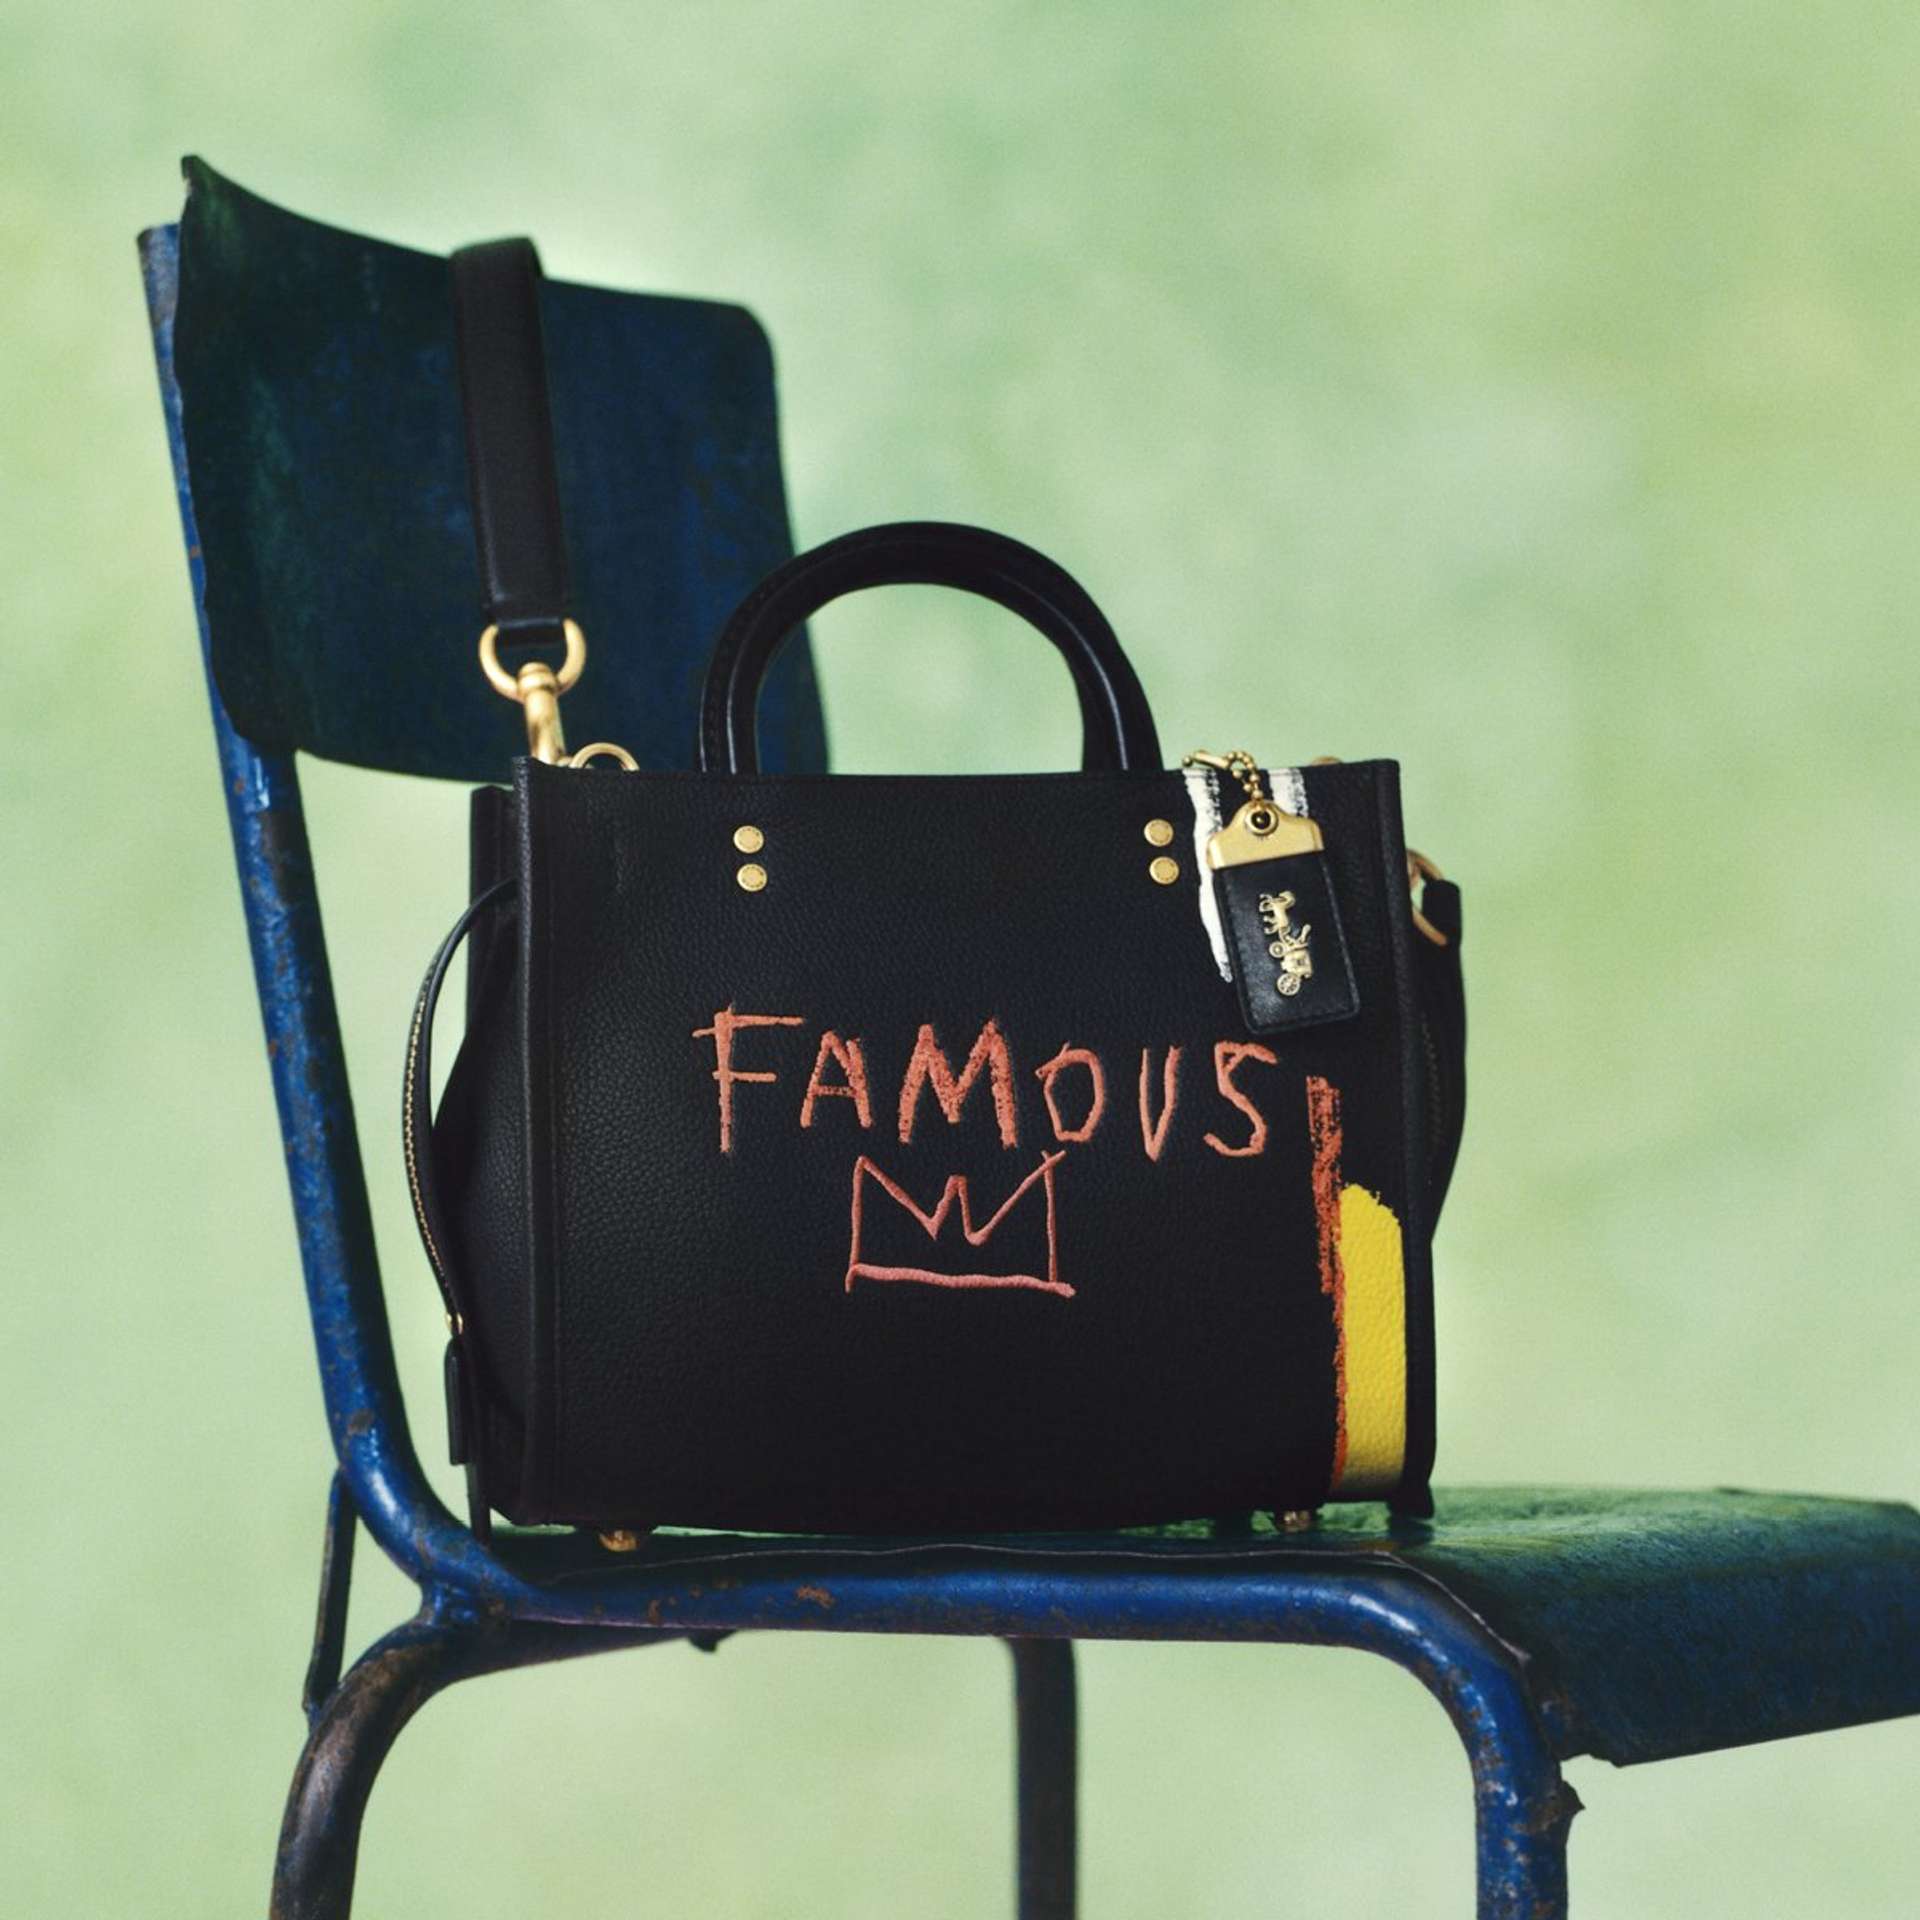 An image of a handbag by brand Coach, featuring Jean-Michel Basquiat’s distinctive crown.